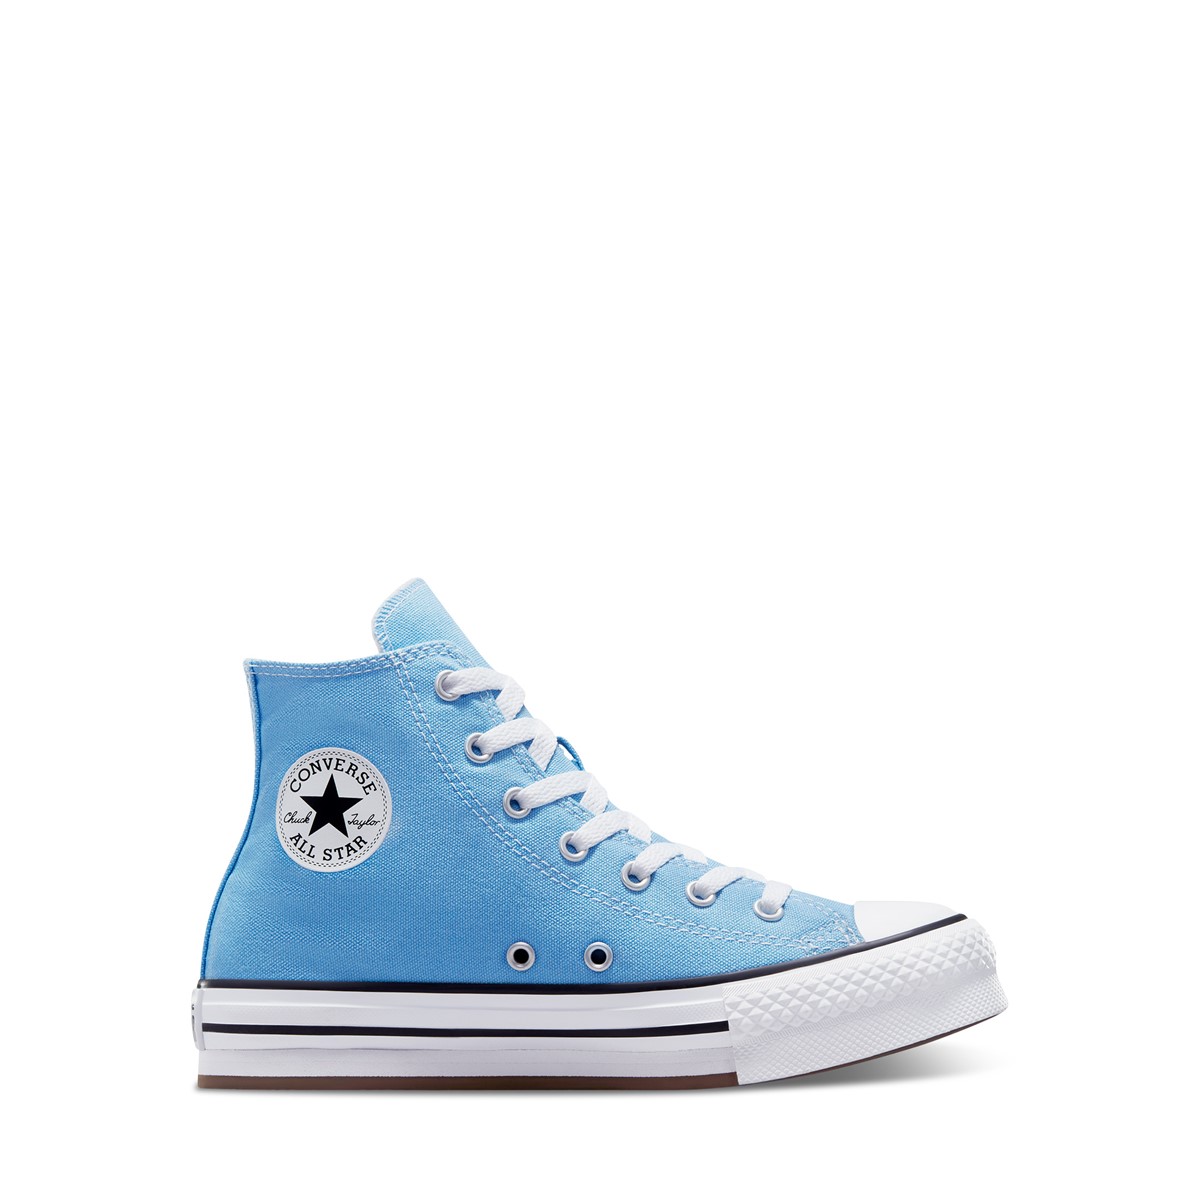 Little Kids' Chuck Taylor EVA Hi Platform Sneakers in Blue/White